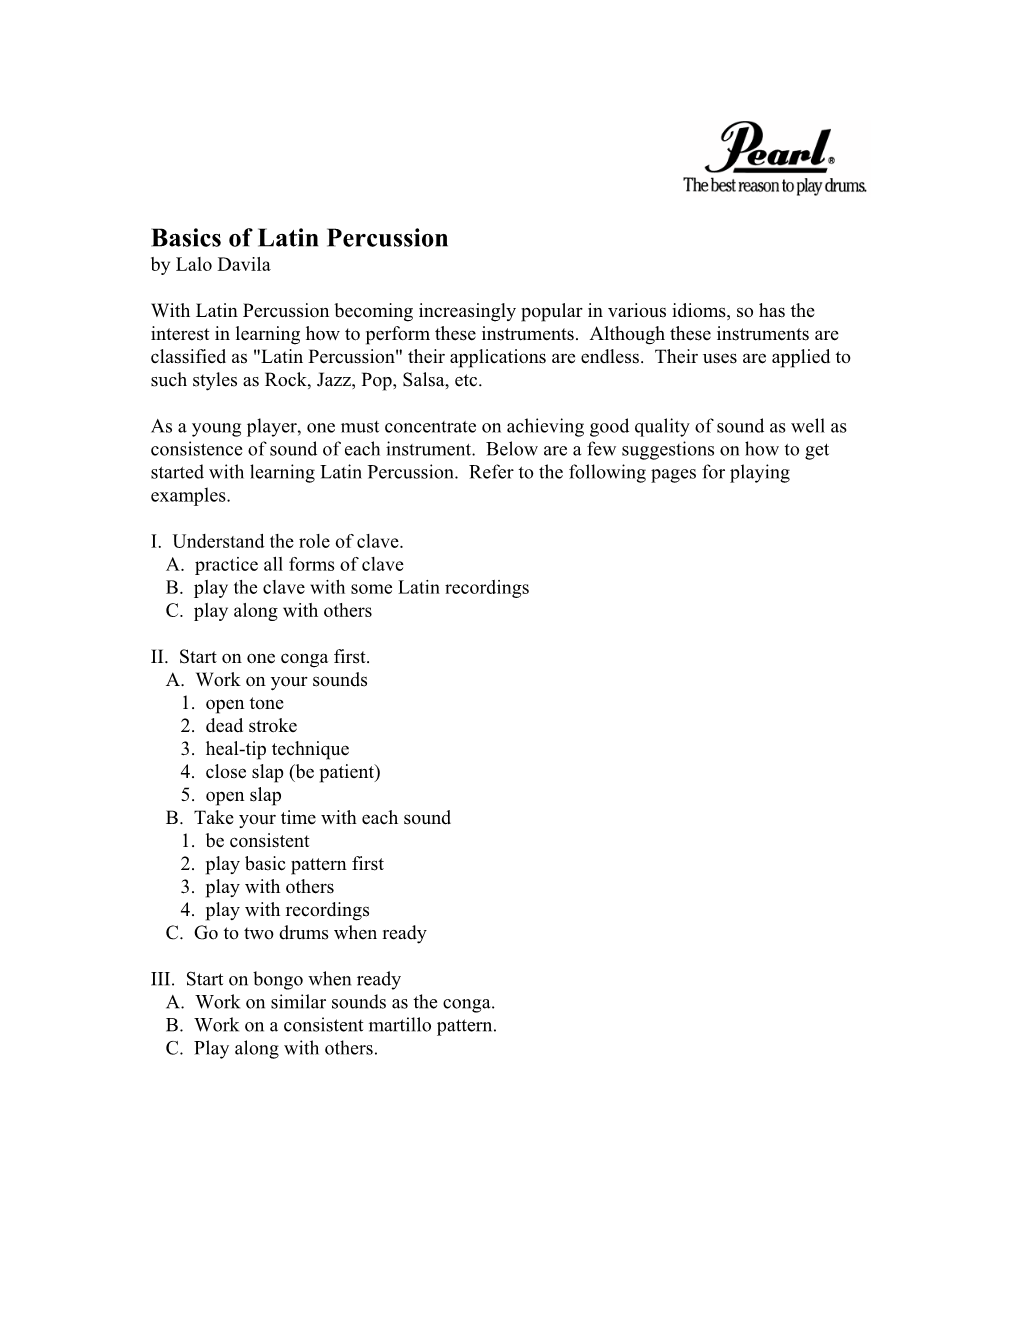 Basics of Latin Percussion by Lalo Davila